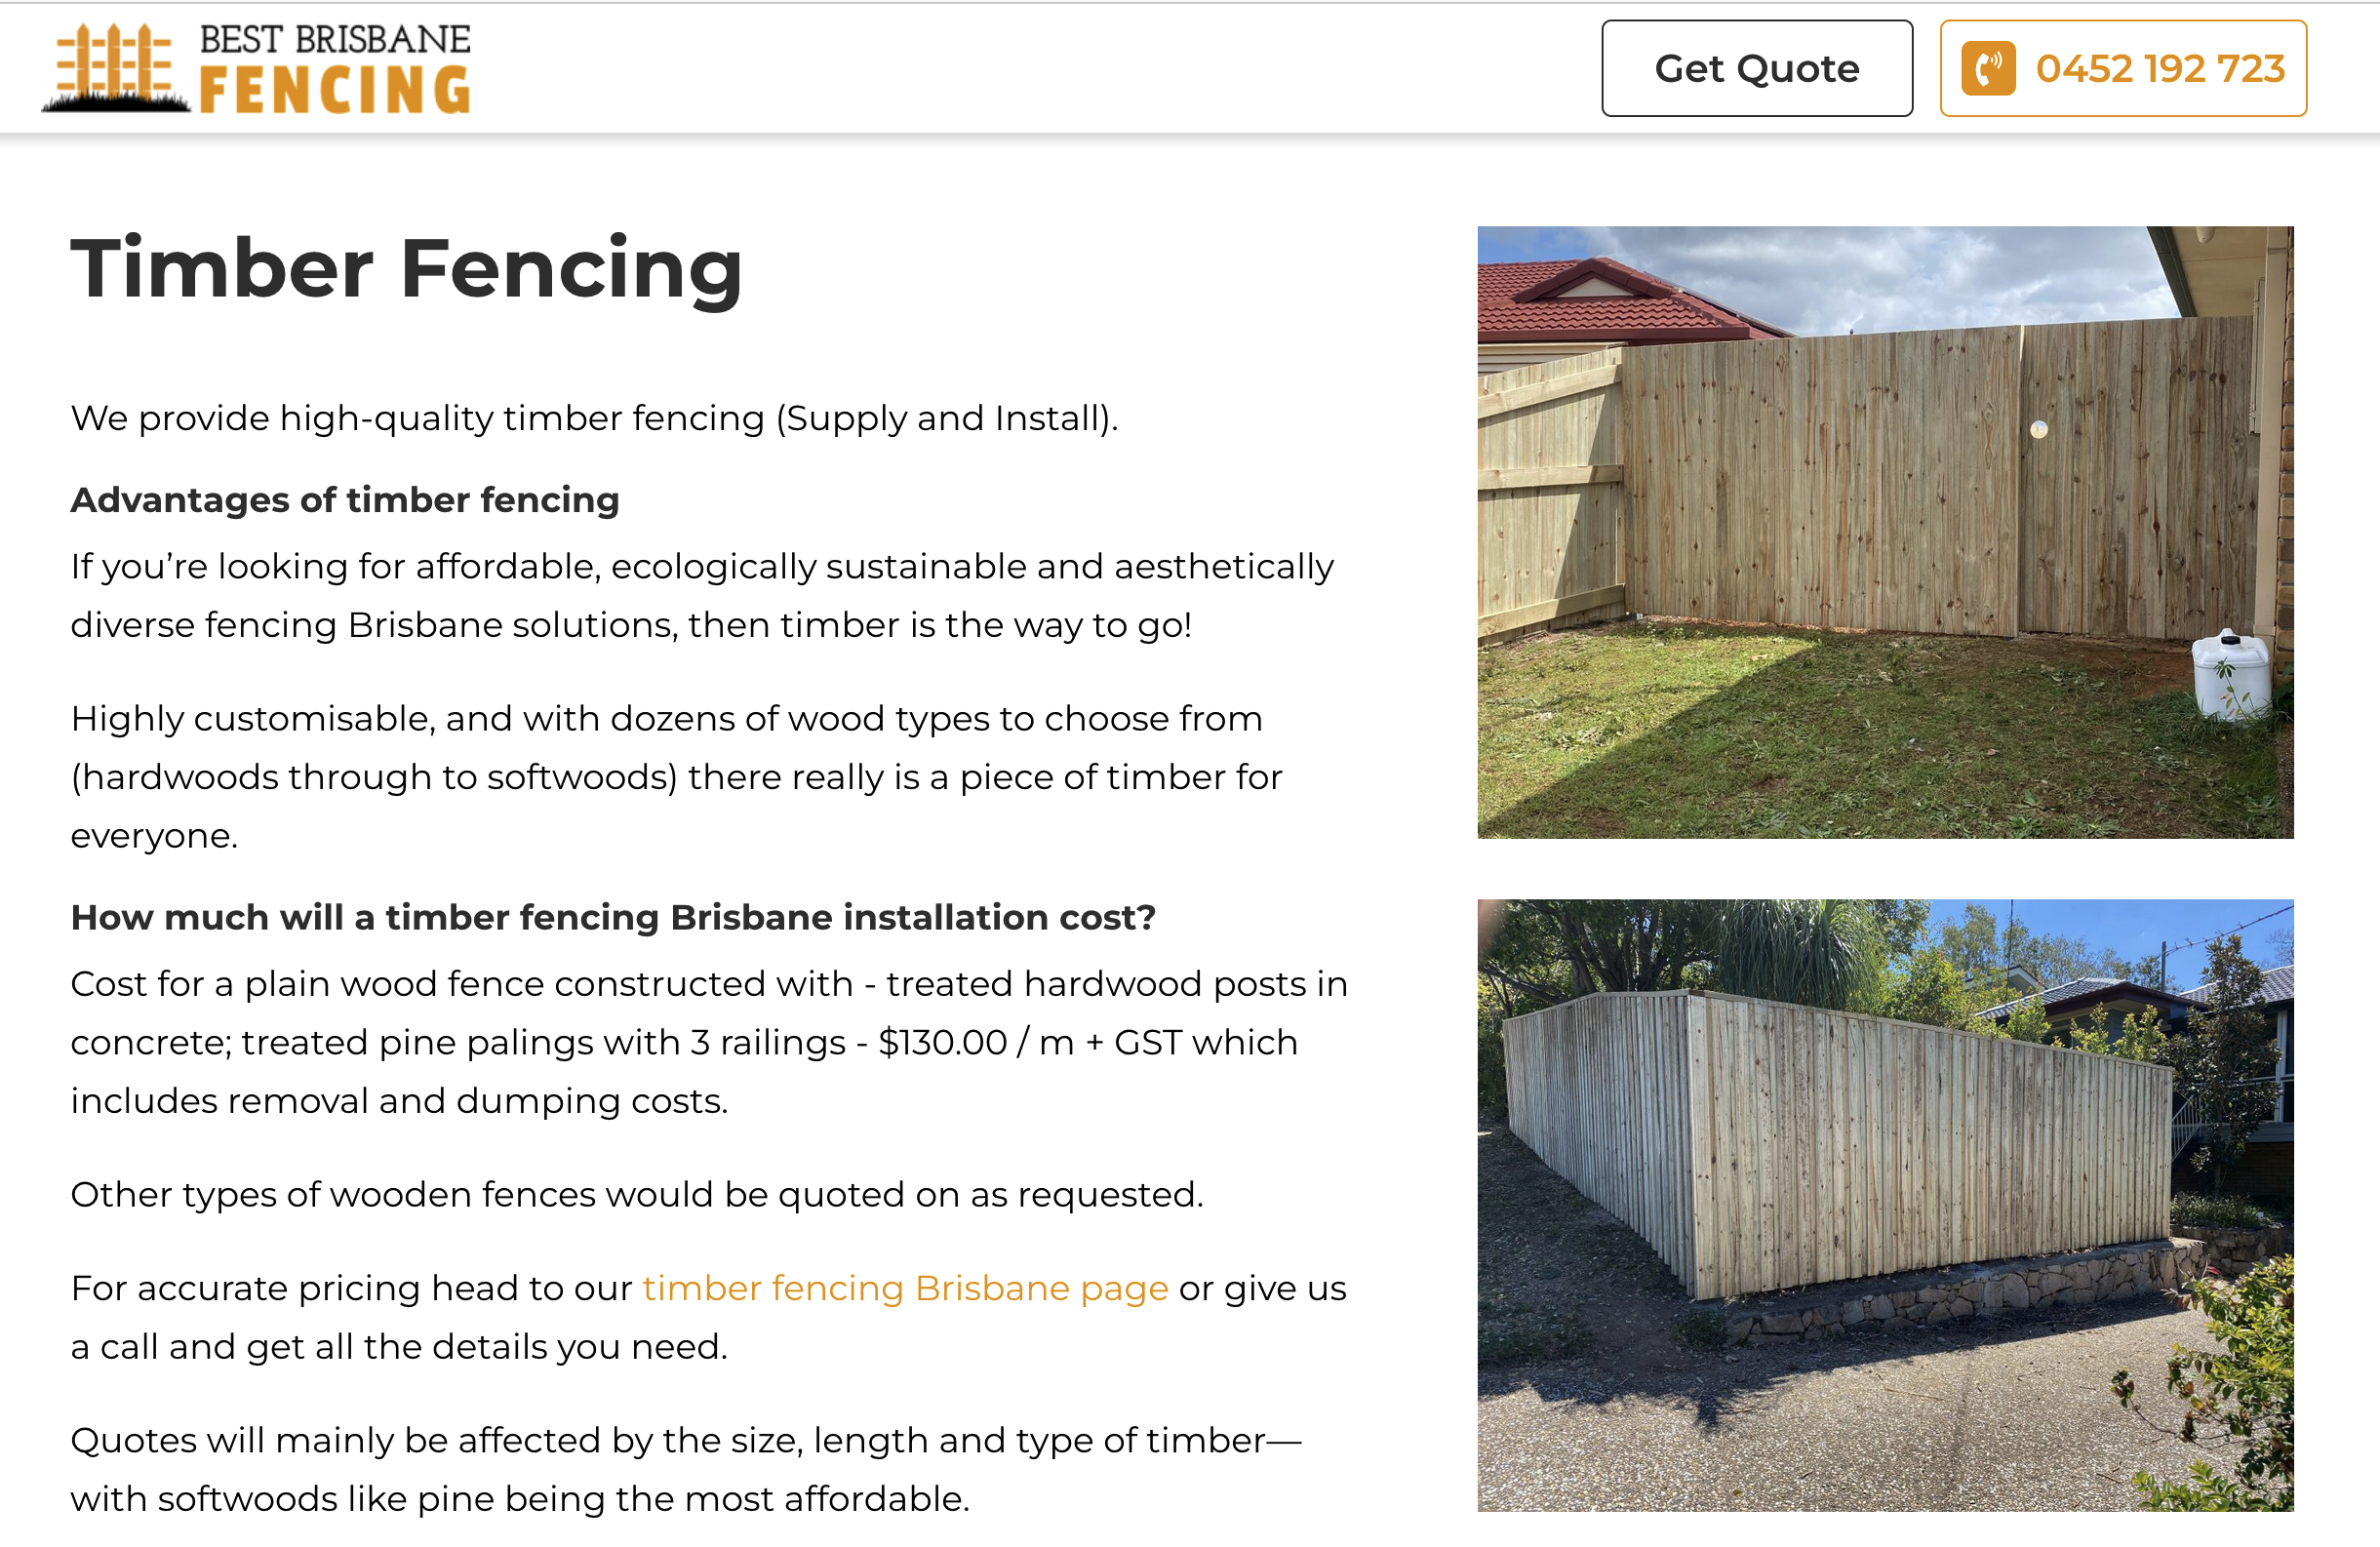 fencing brisbane project